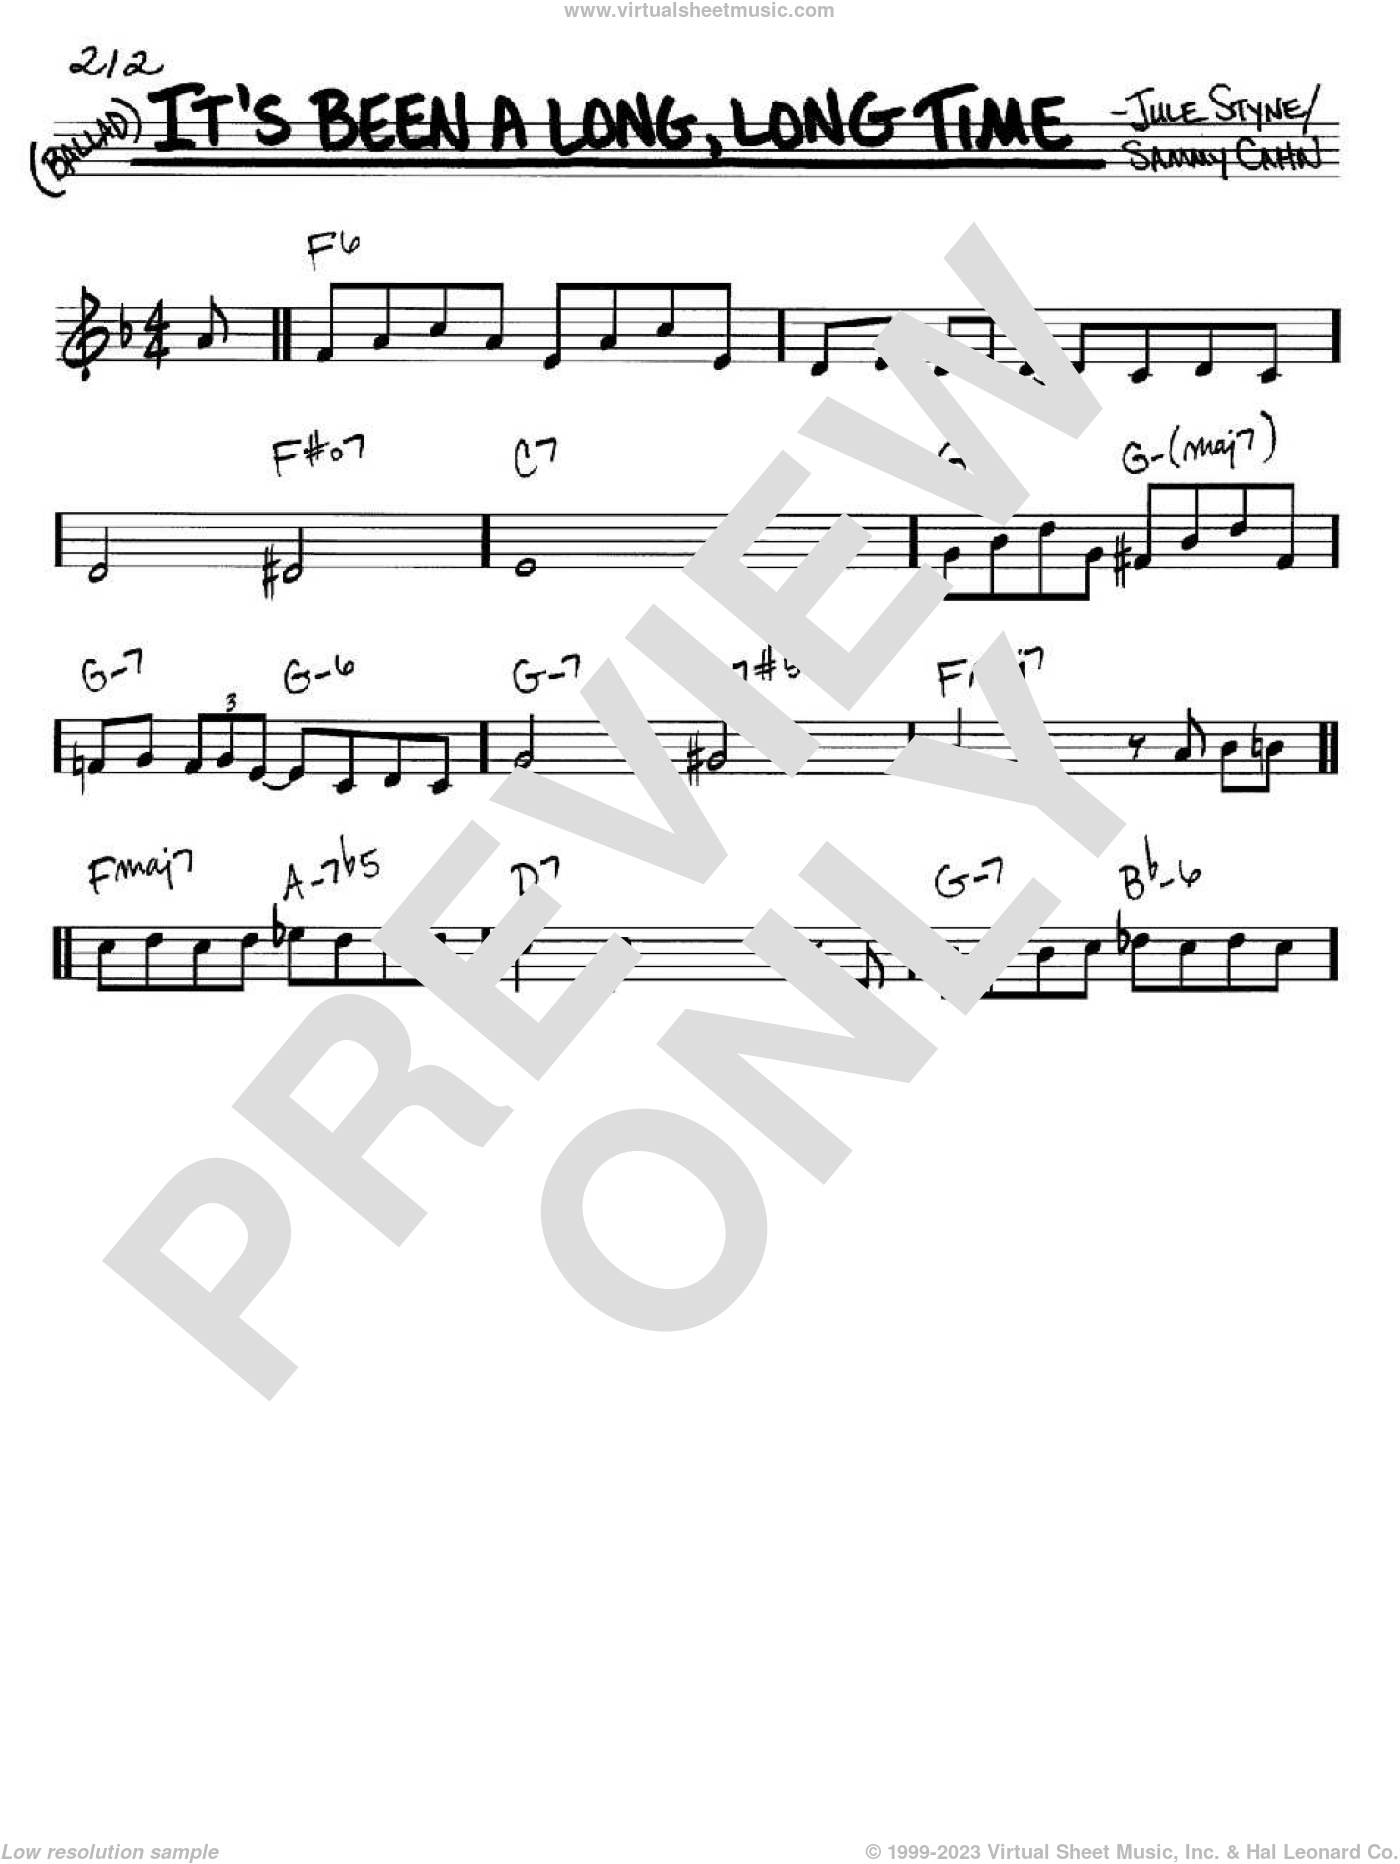 ☆ Kitty Kallen-It's Been A Long, Long Time Sheet Music pdf, - Free Score  Download ☆